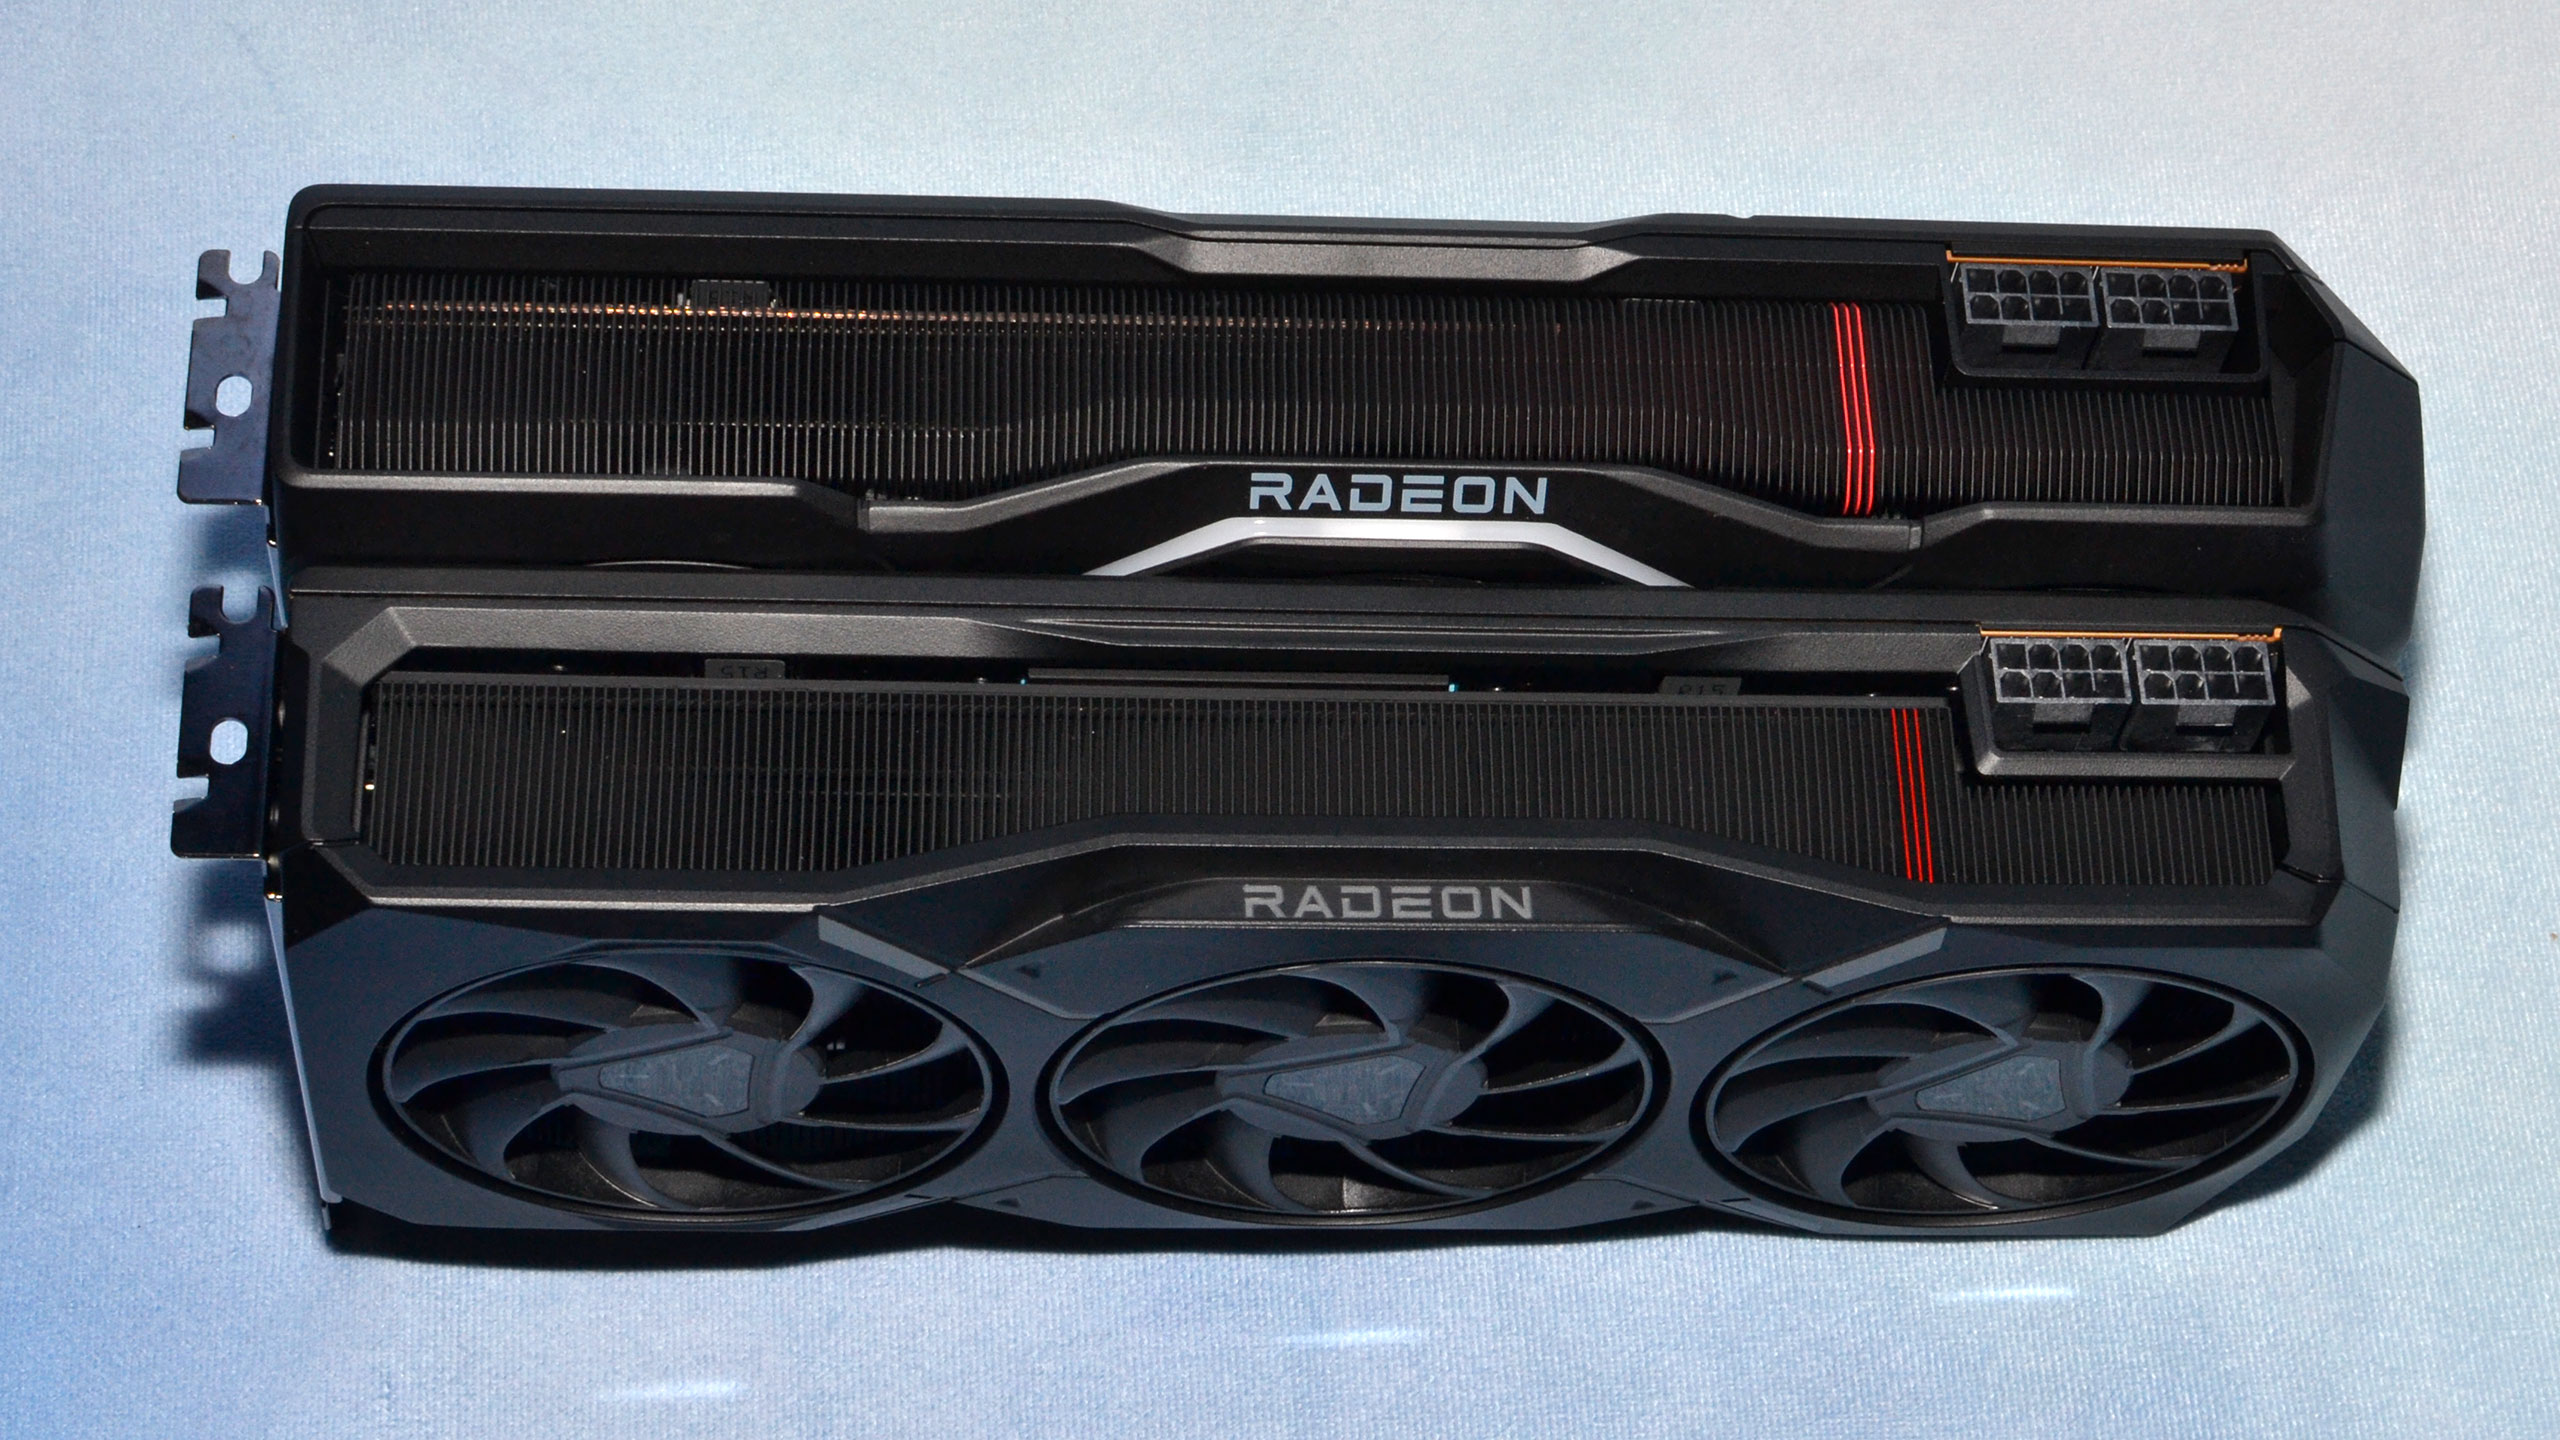 AMD Radeon RX 7900 XTX review